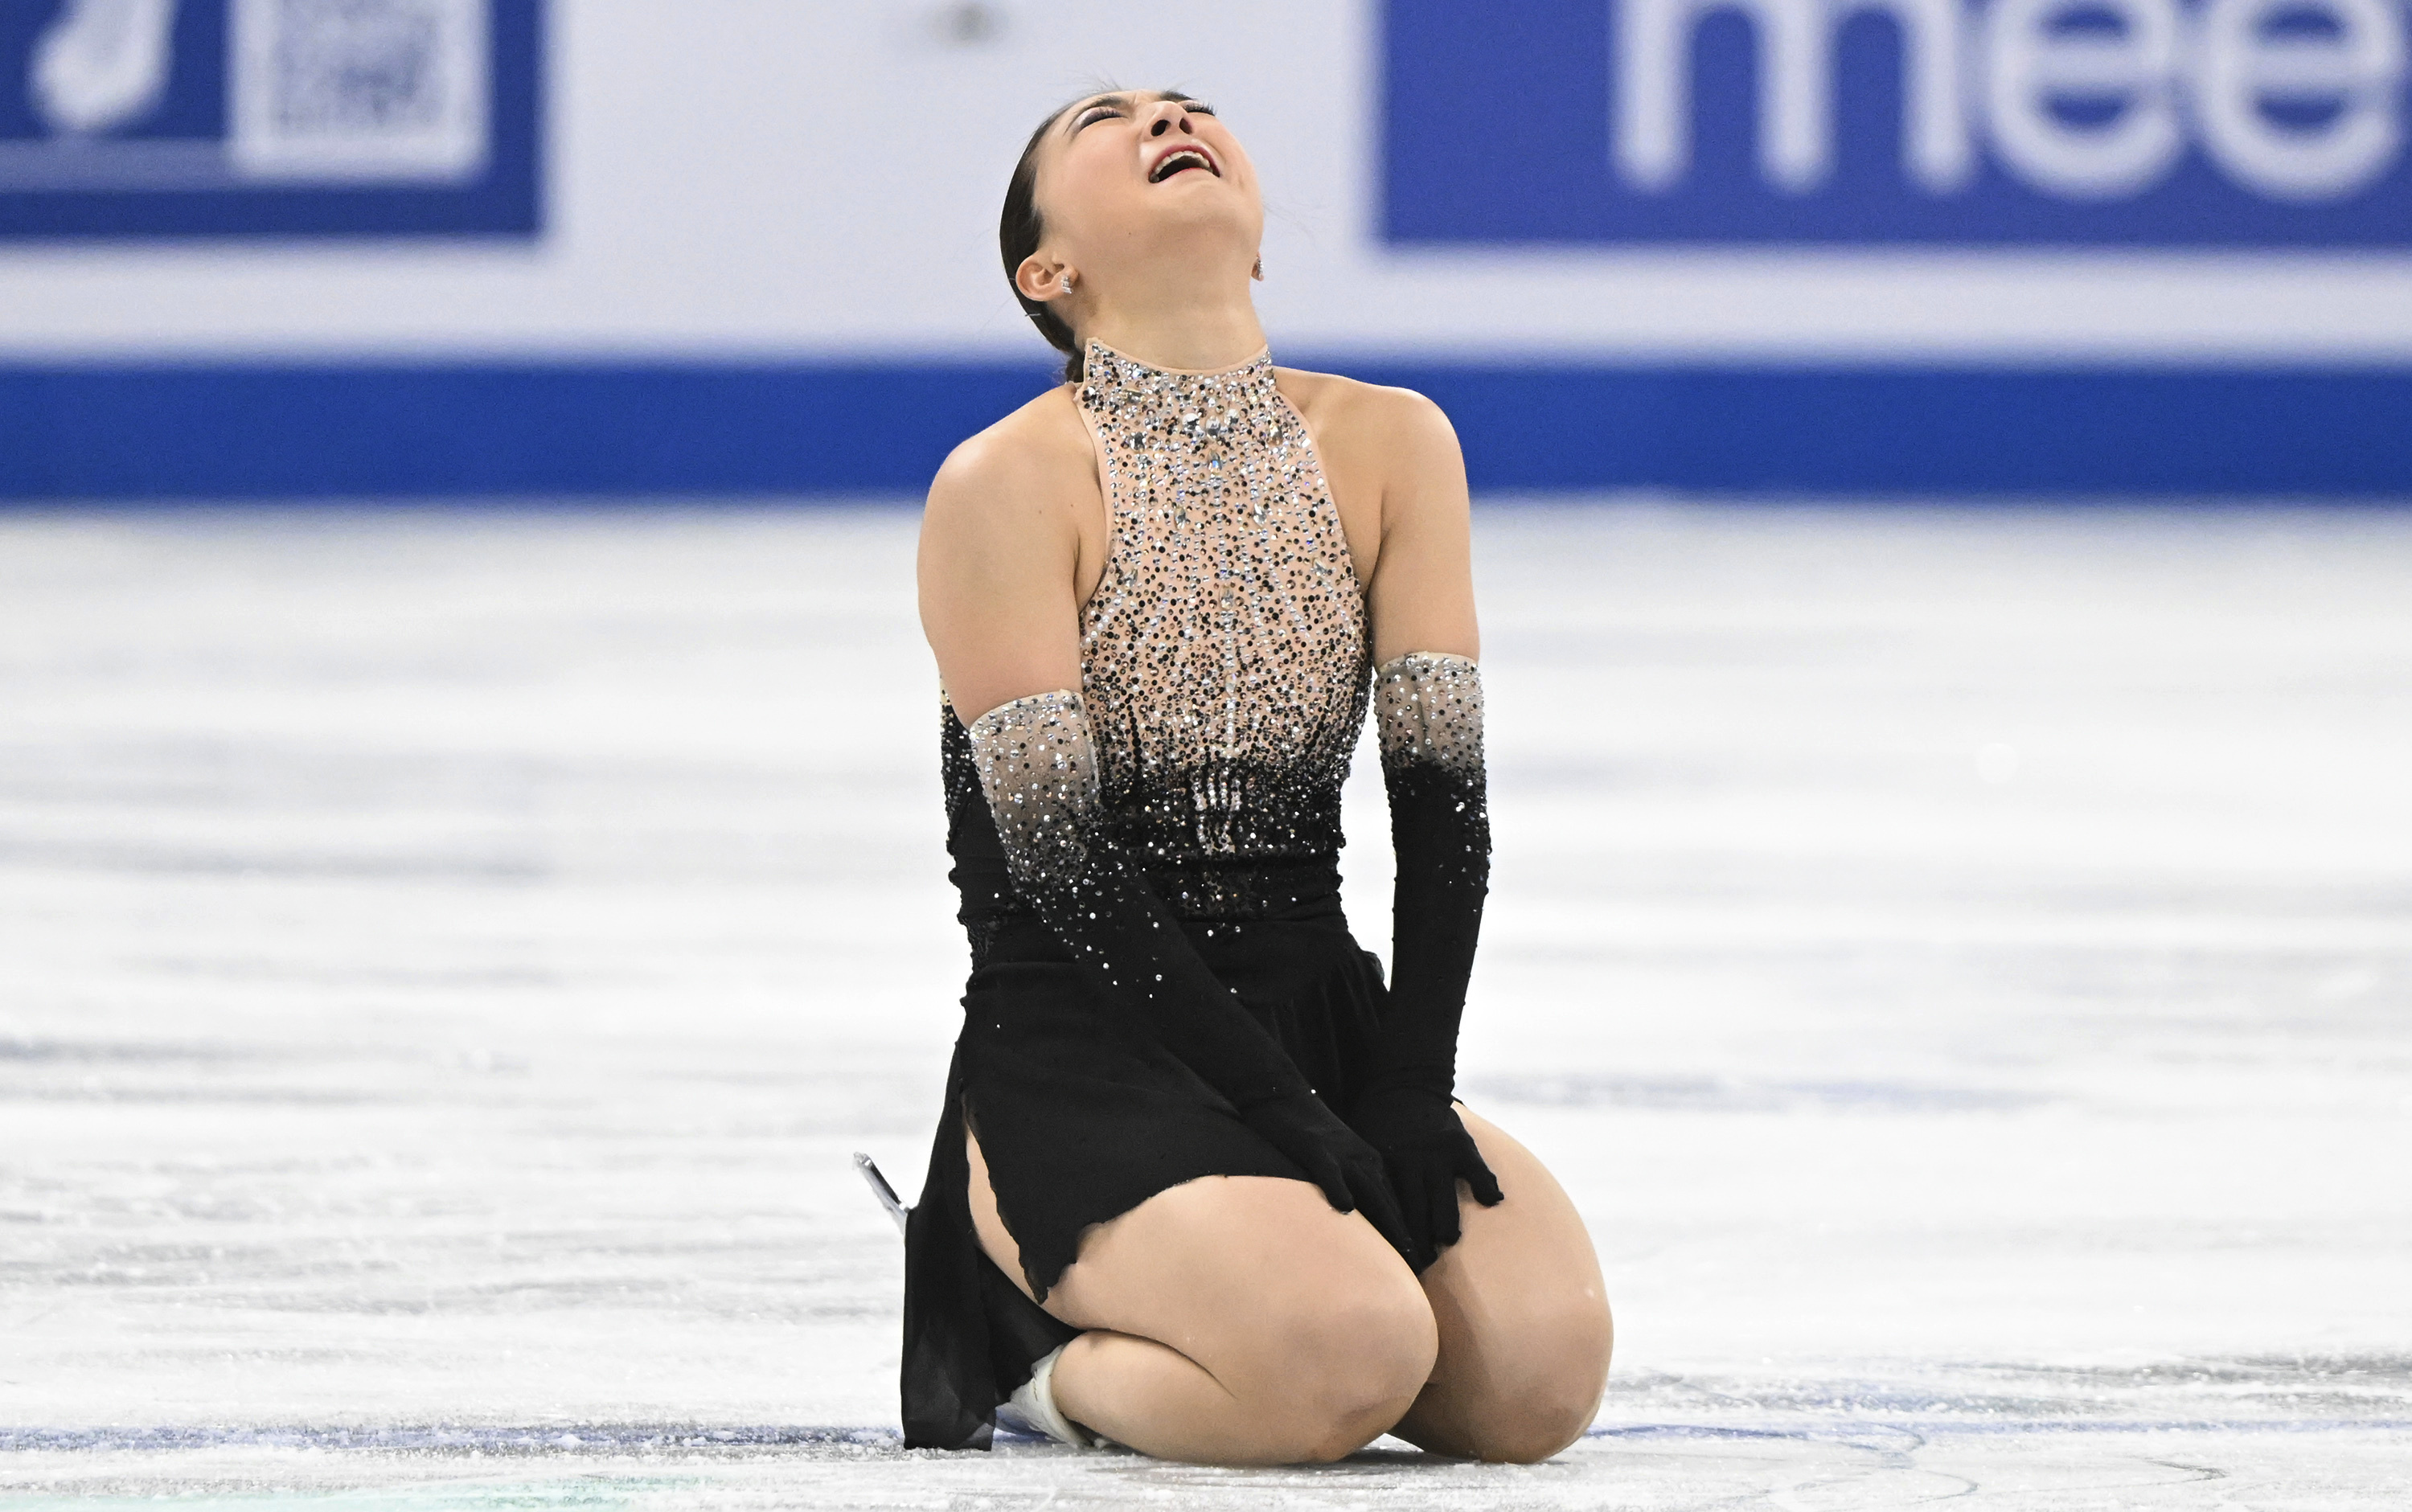 Japan's Sakamoto three-peats as women's figure skating world champion